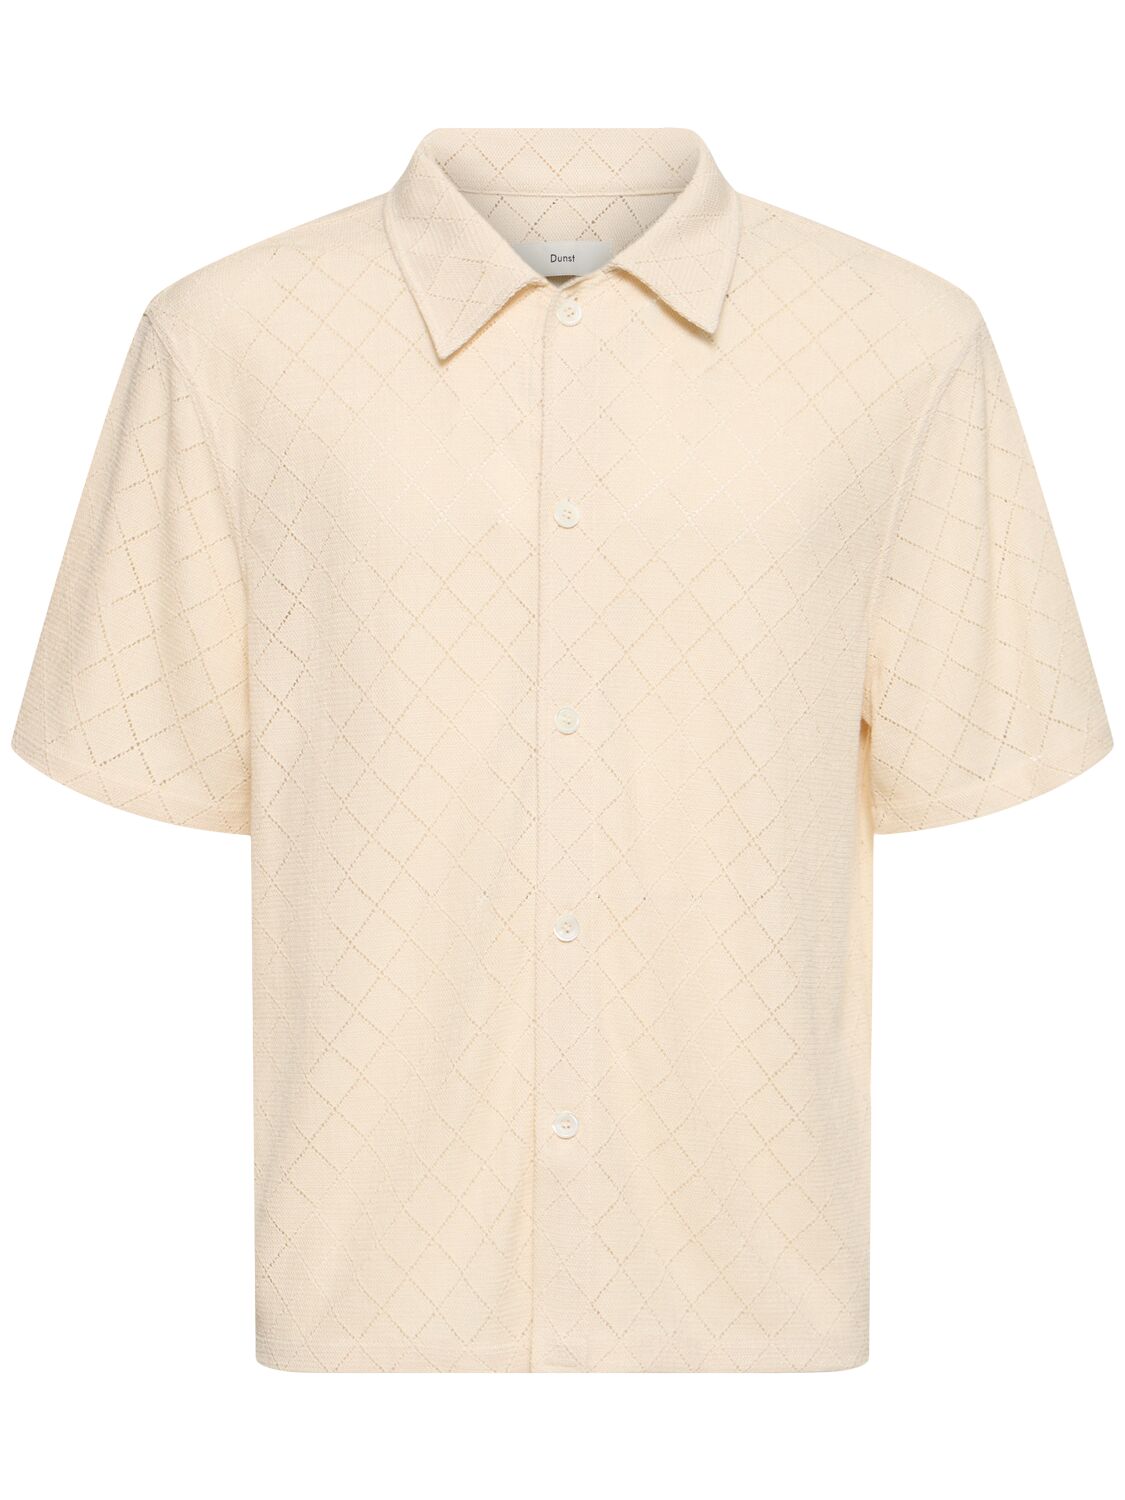 Dunst Unisex Crochet Short Sleeve Shirt In Cream